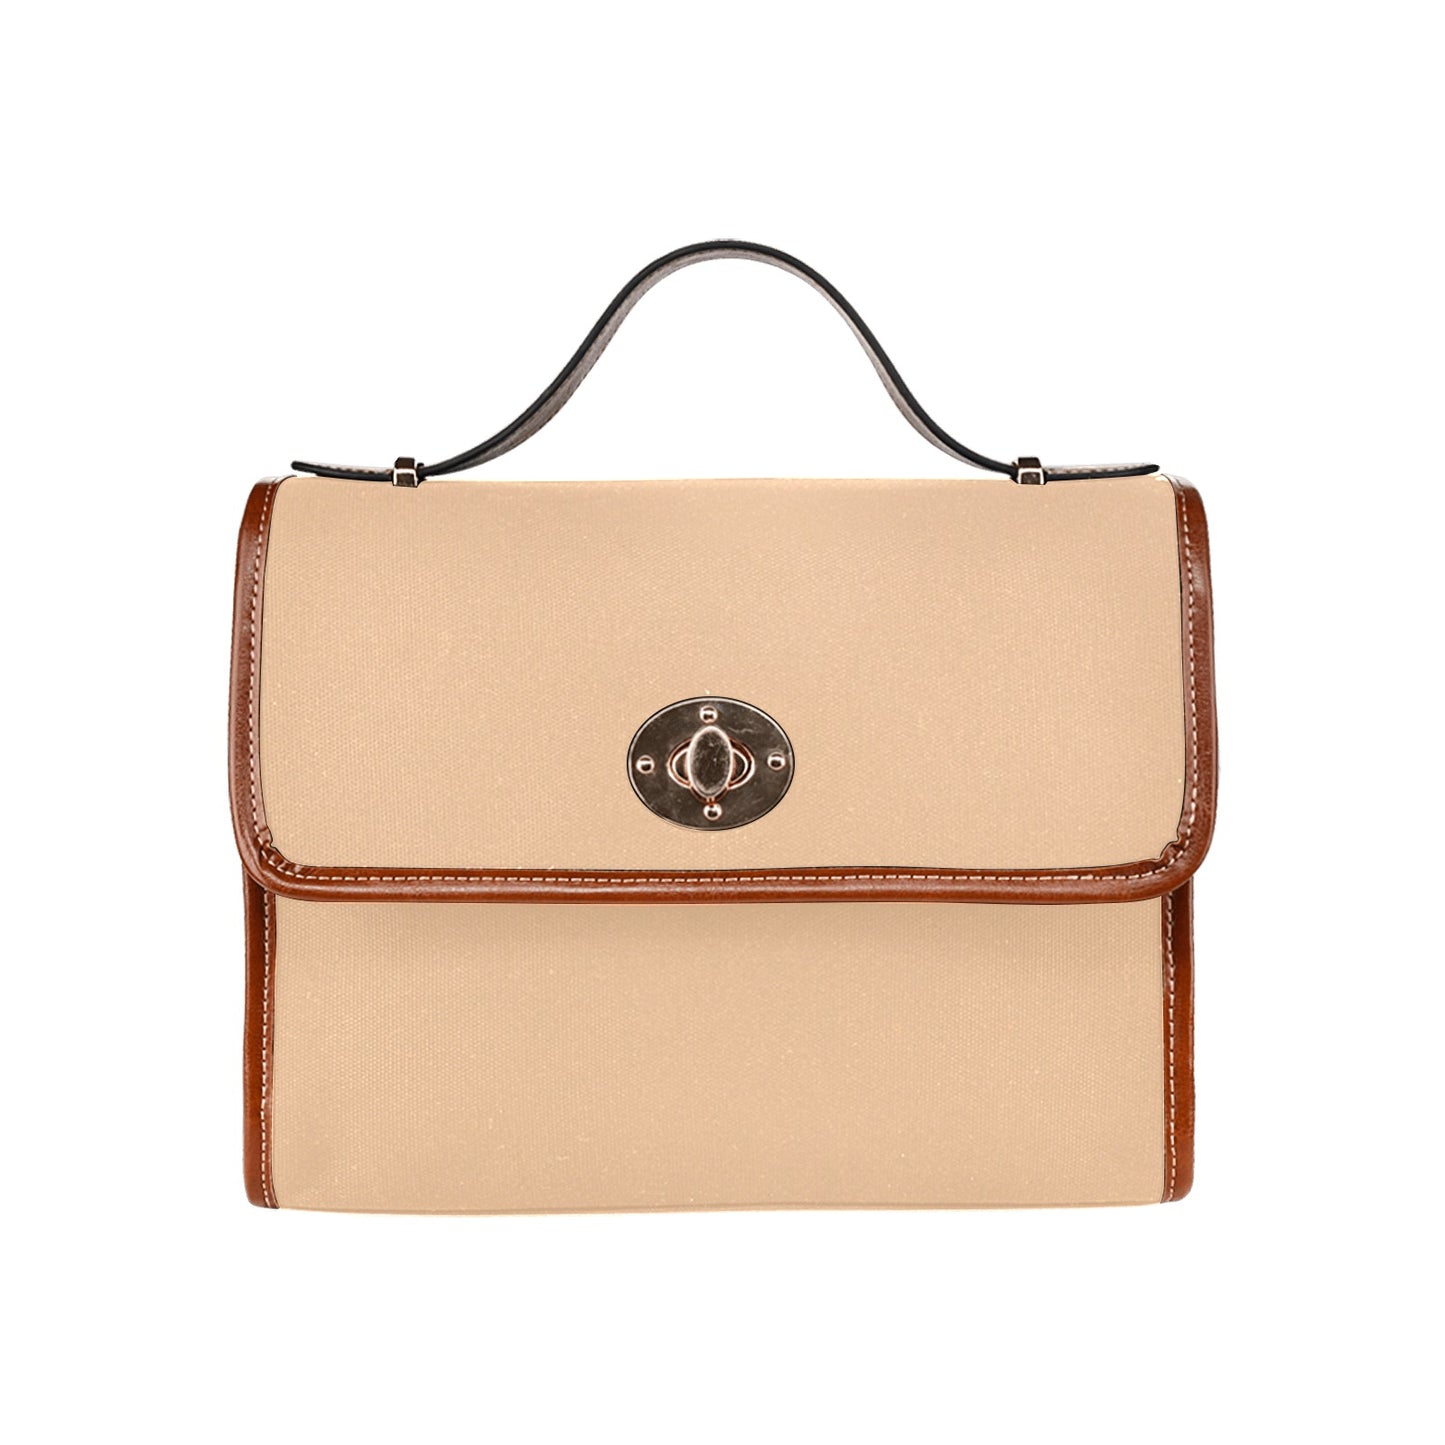 fz zone handbag one size / the zone - vanilla all over print waterproof canvas bag(model1641)(brown strap)